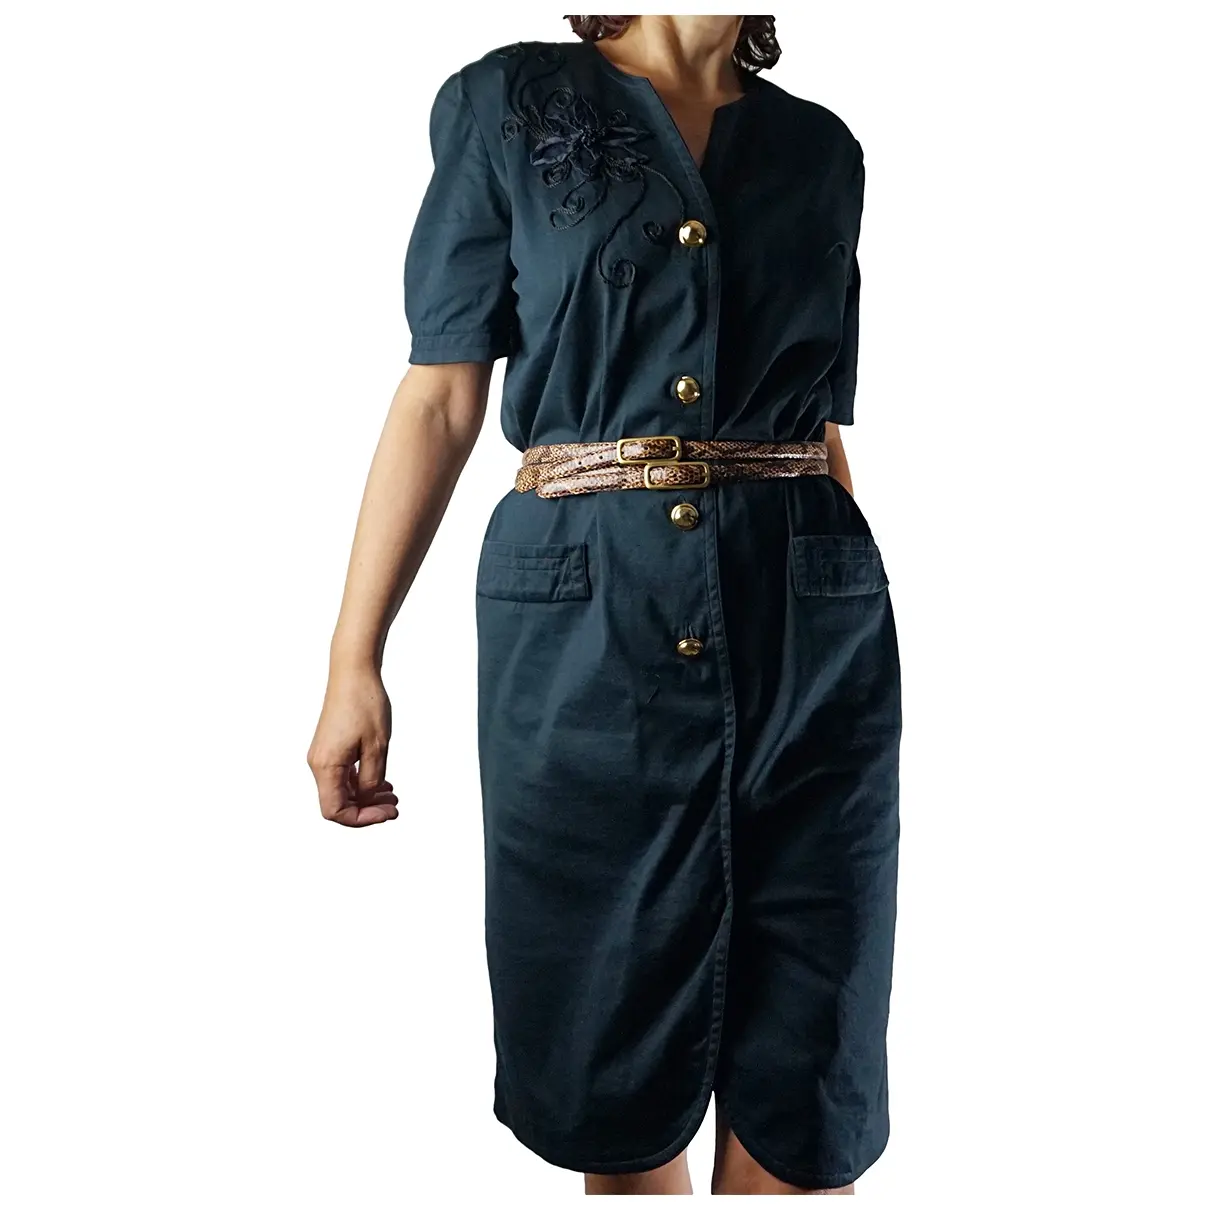 Pierre Cardin Mid-length dress for sale - Vintage